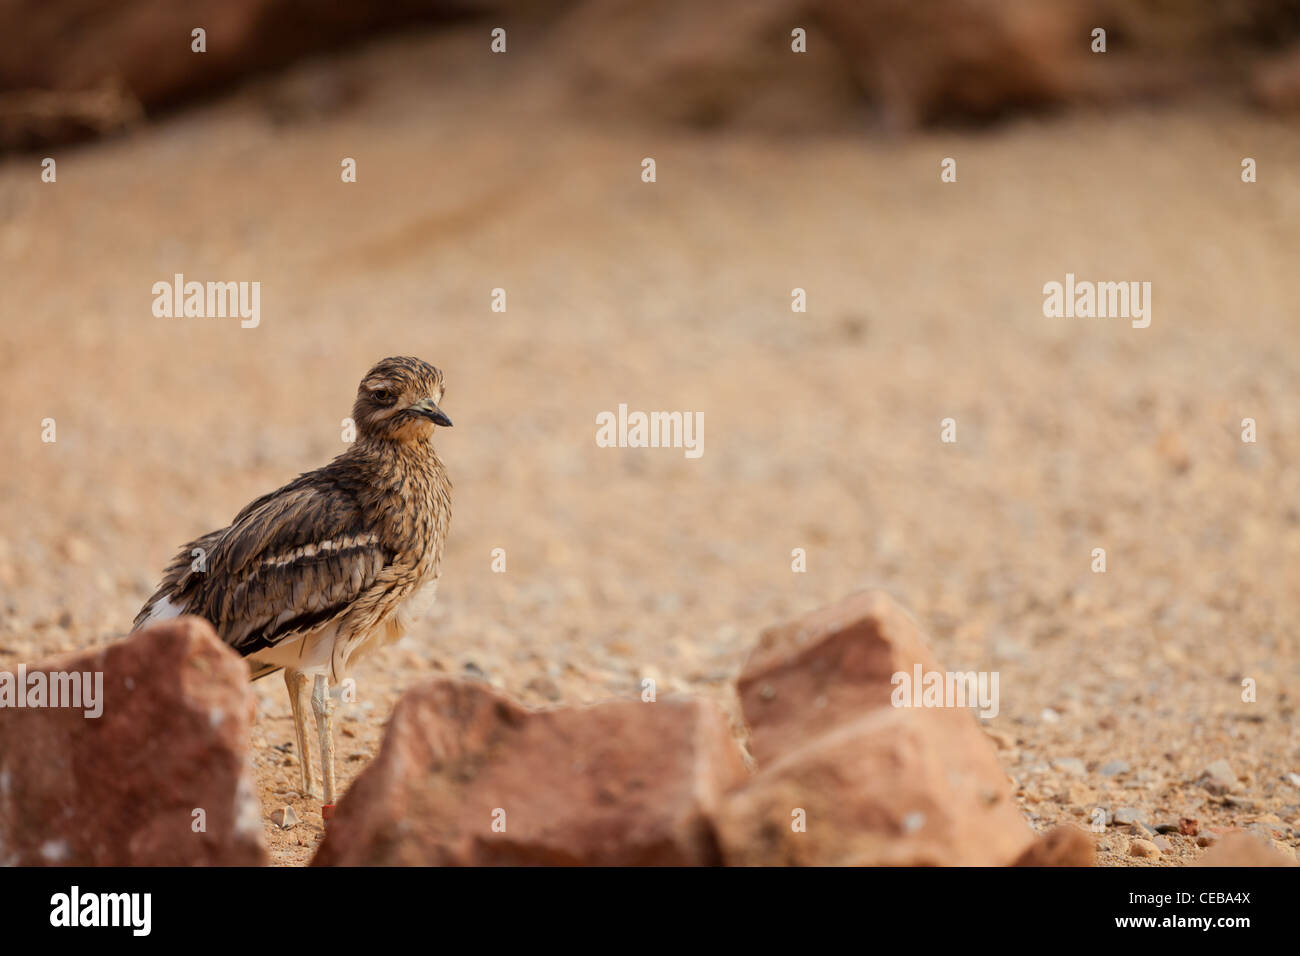 Roadrunner Vogel in einer Wüstenumgebung (Zoo) Stockfoto